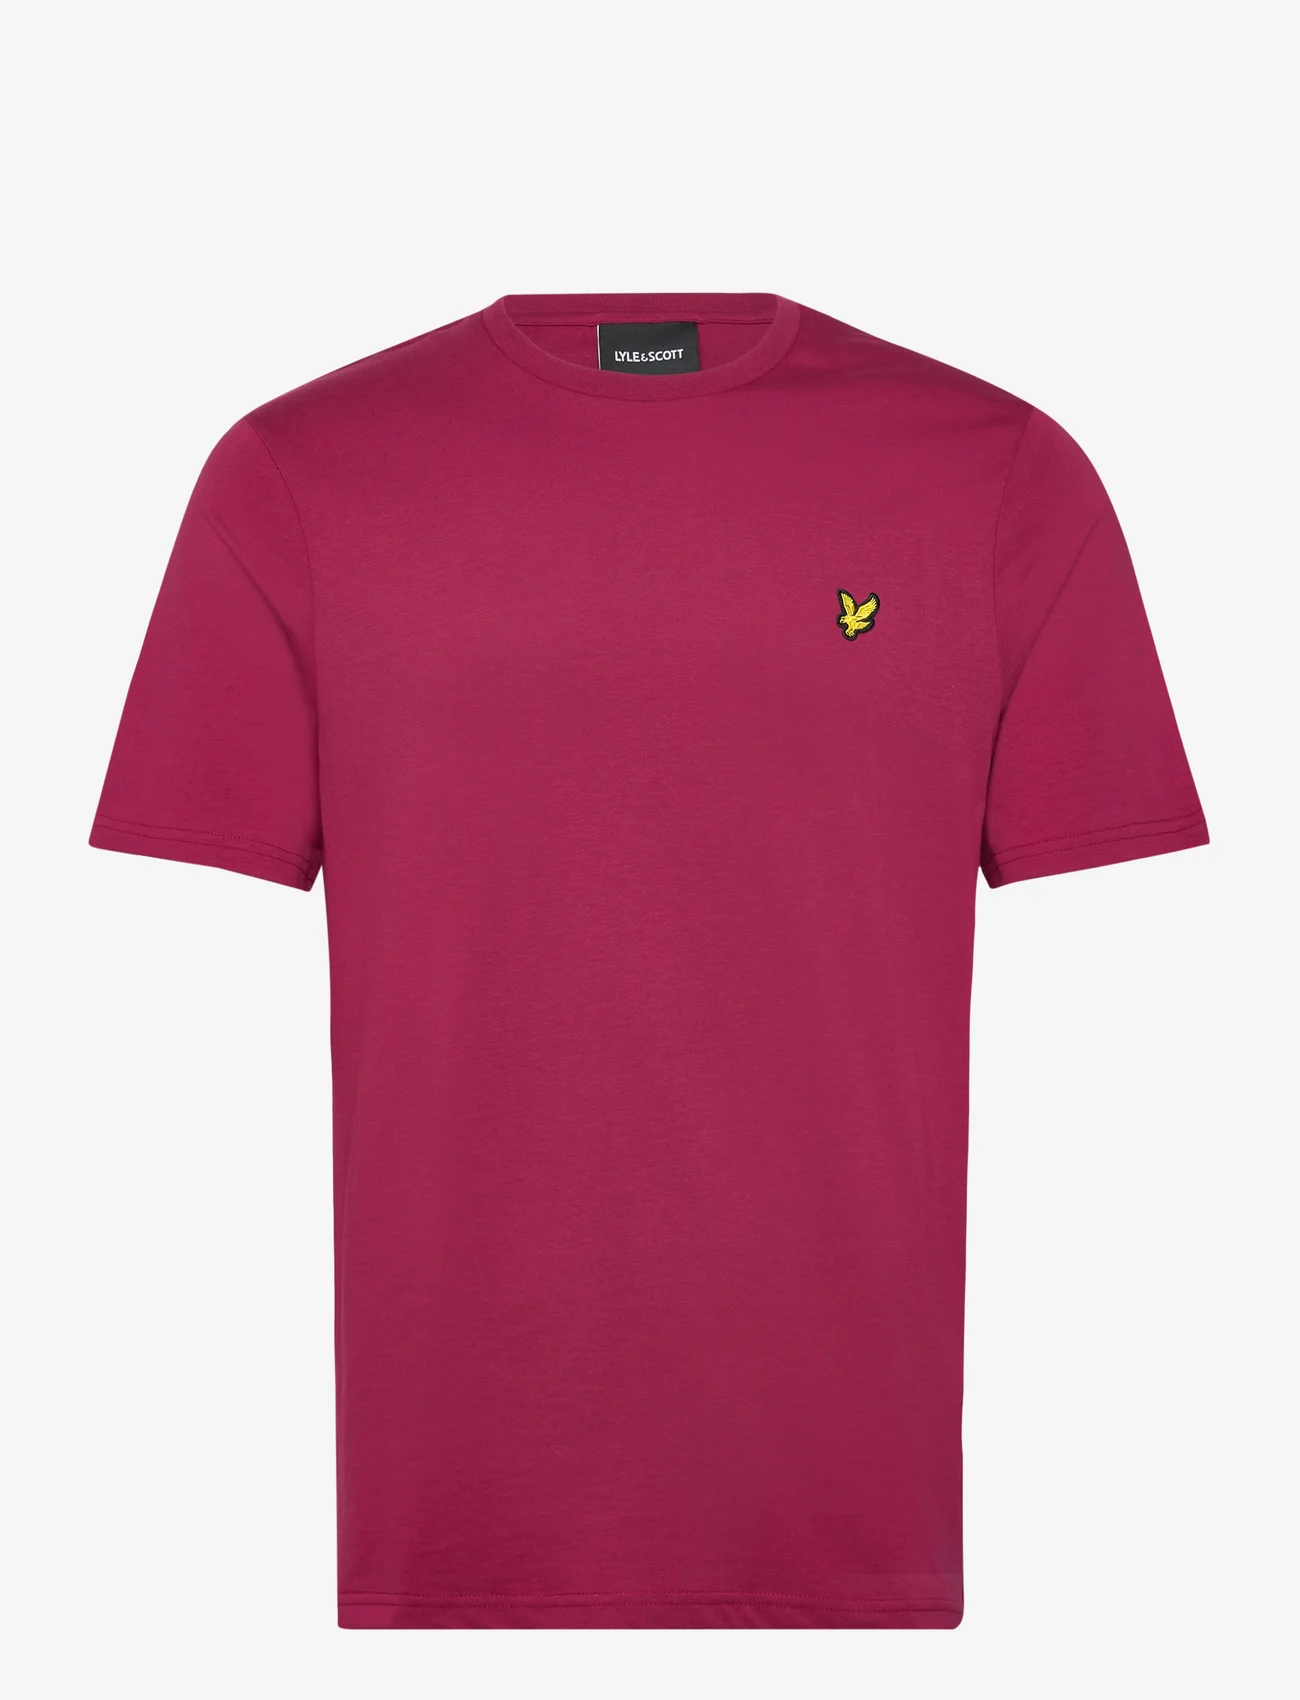 Lyle & Scott - Plain T-Shirt - lägsta priserna - x237 rich burgundy - 0